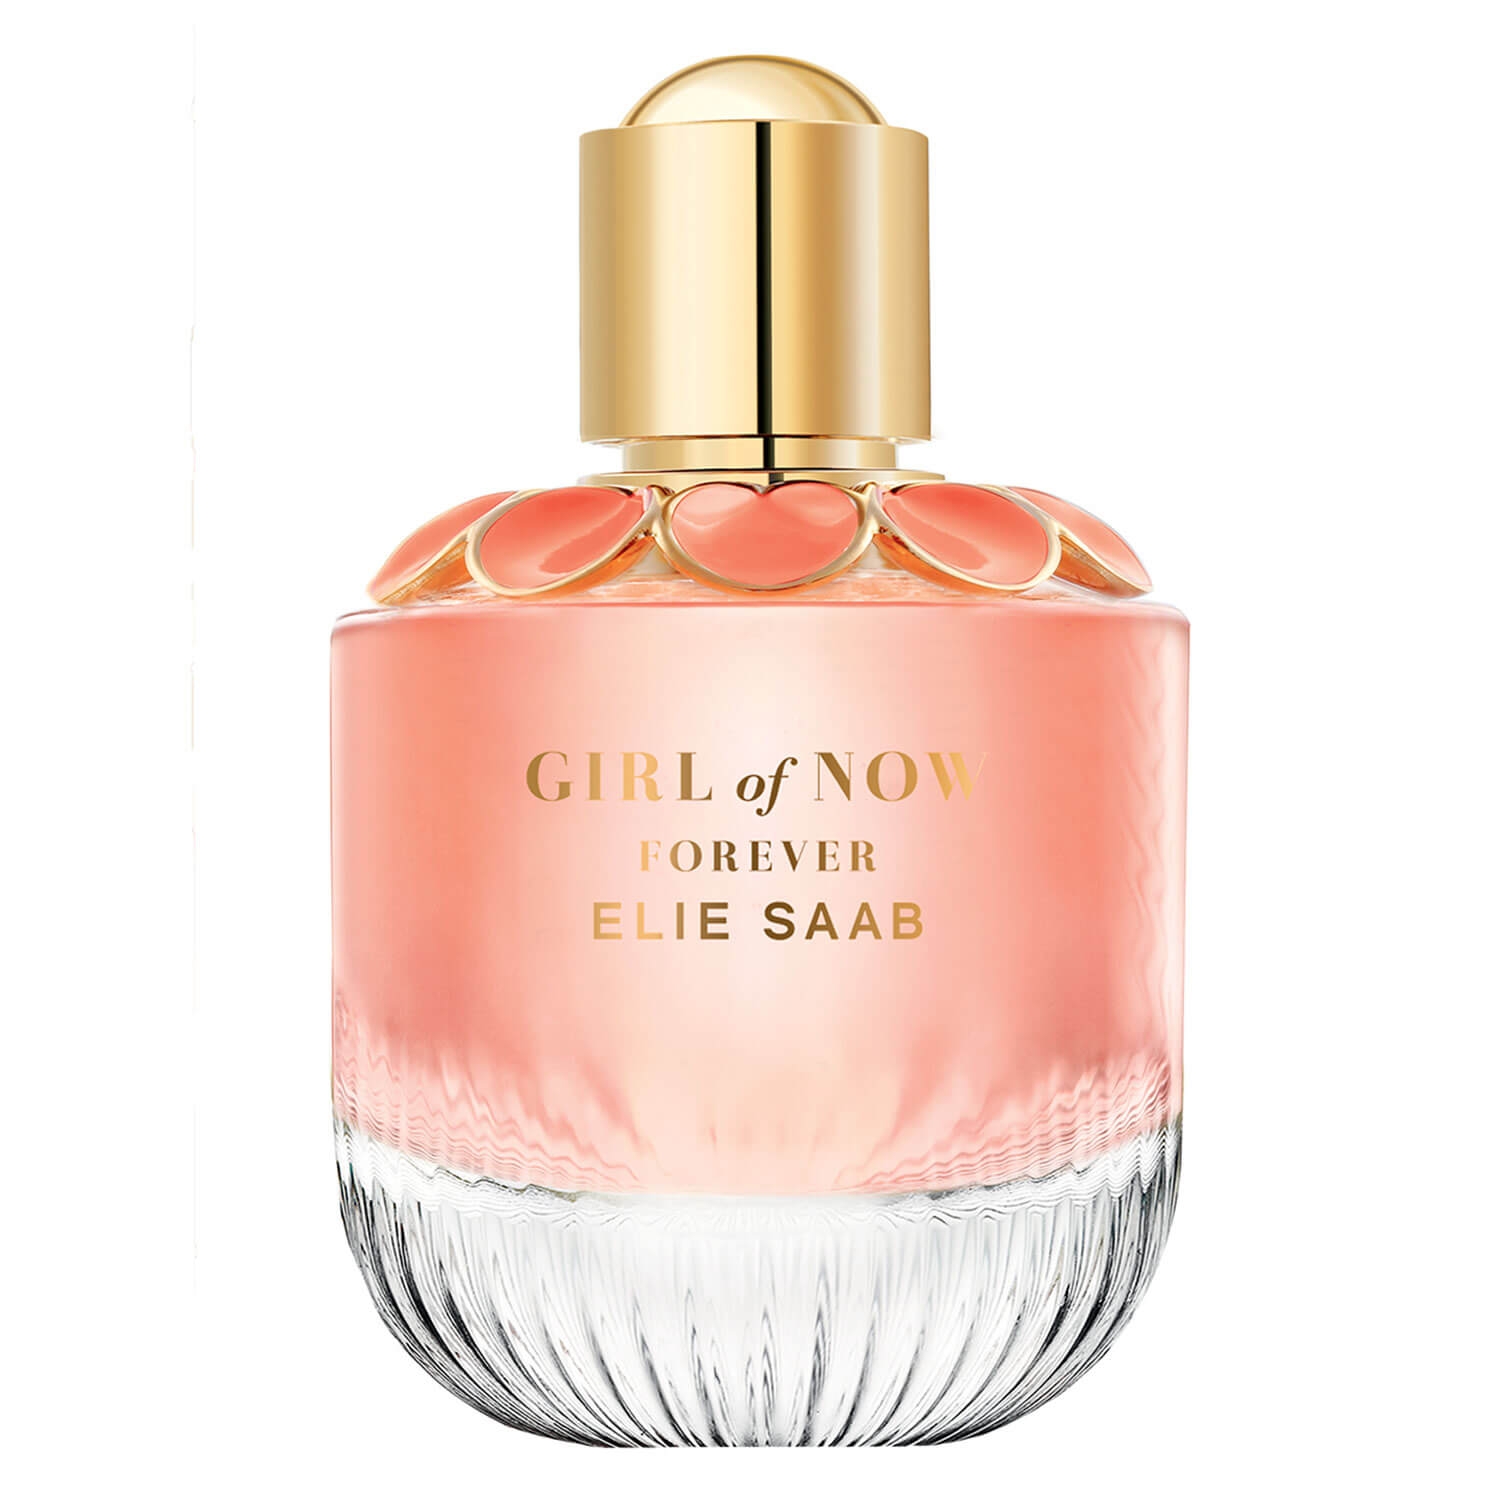 Produktbild von Girl of Now - Forever Eau de Parfum